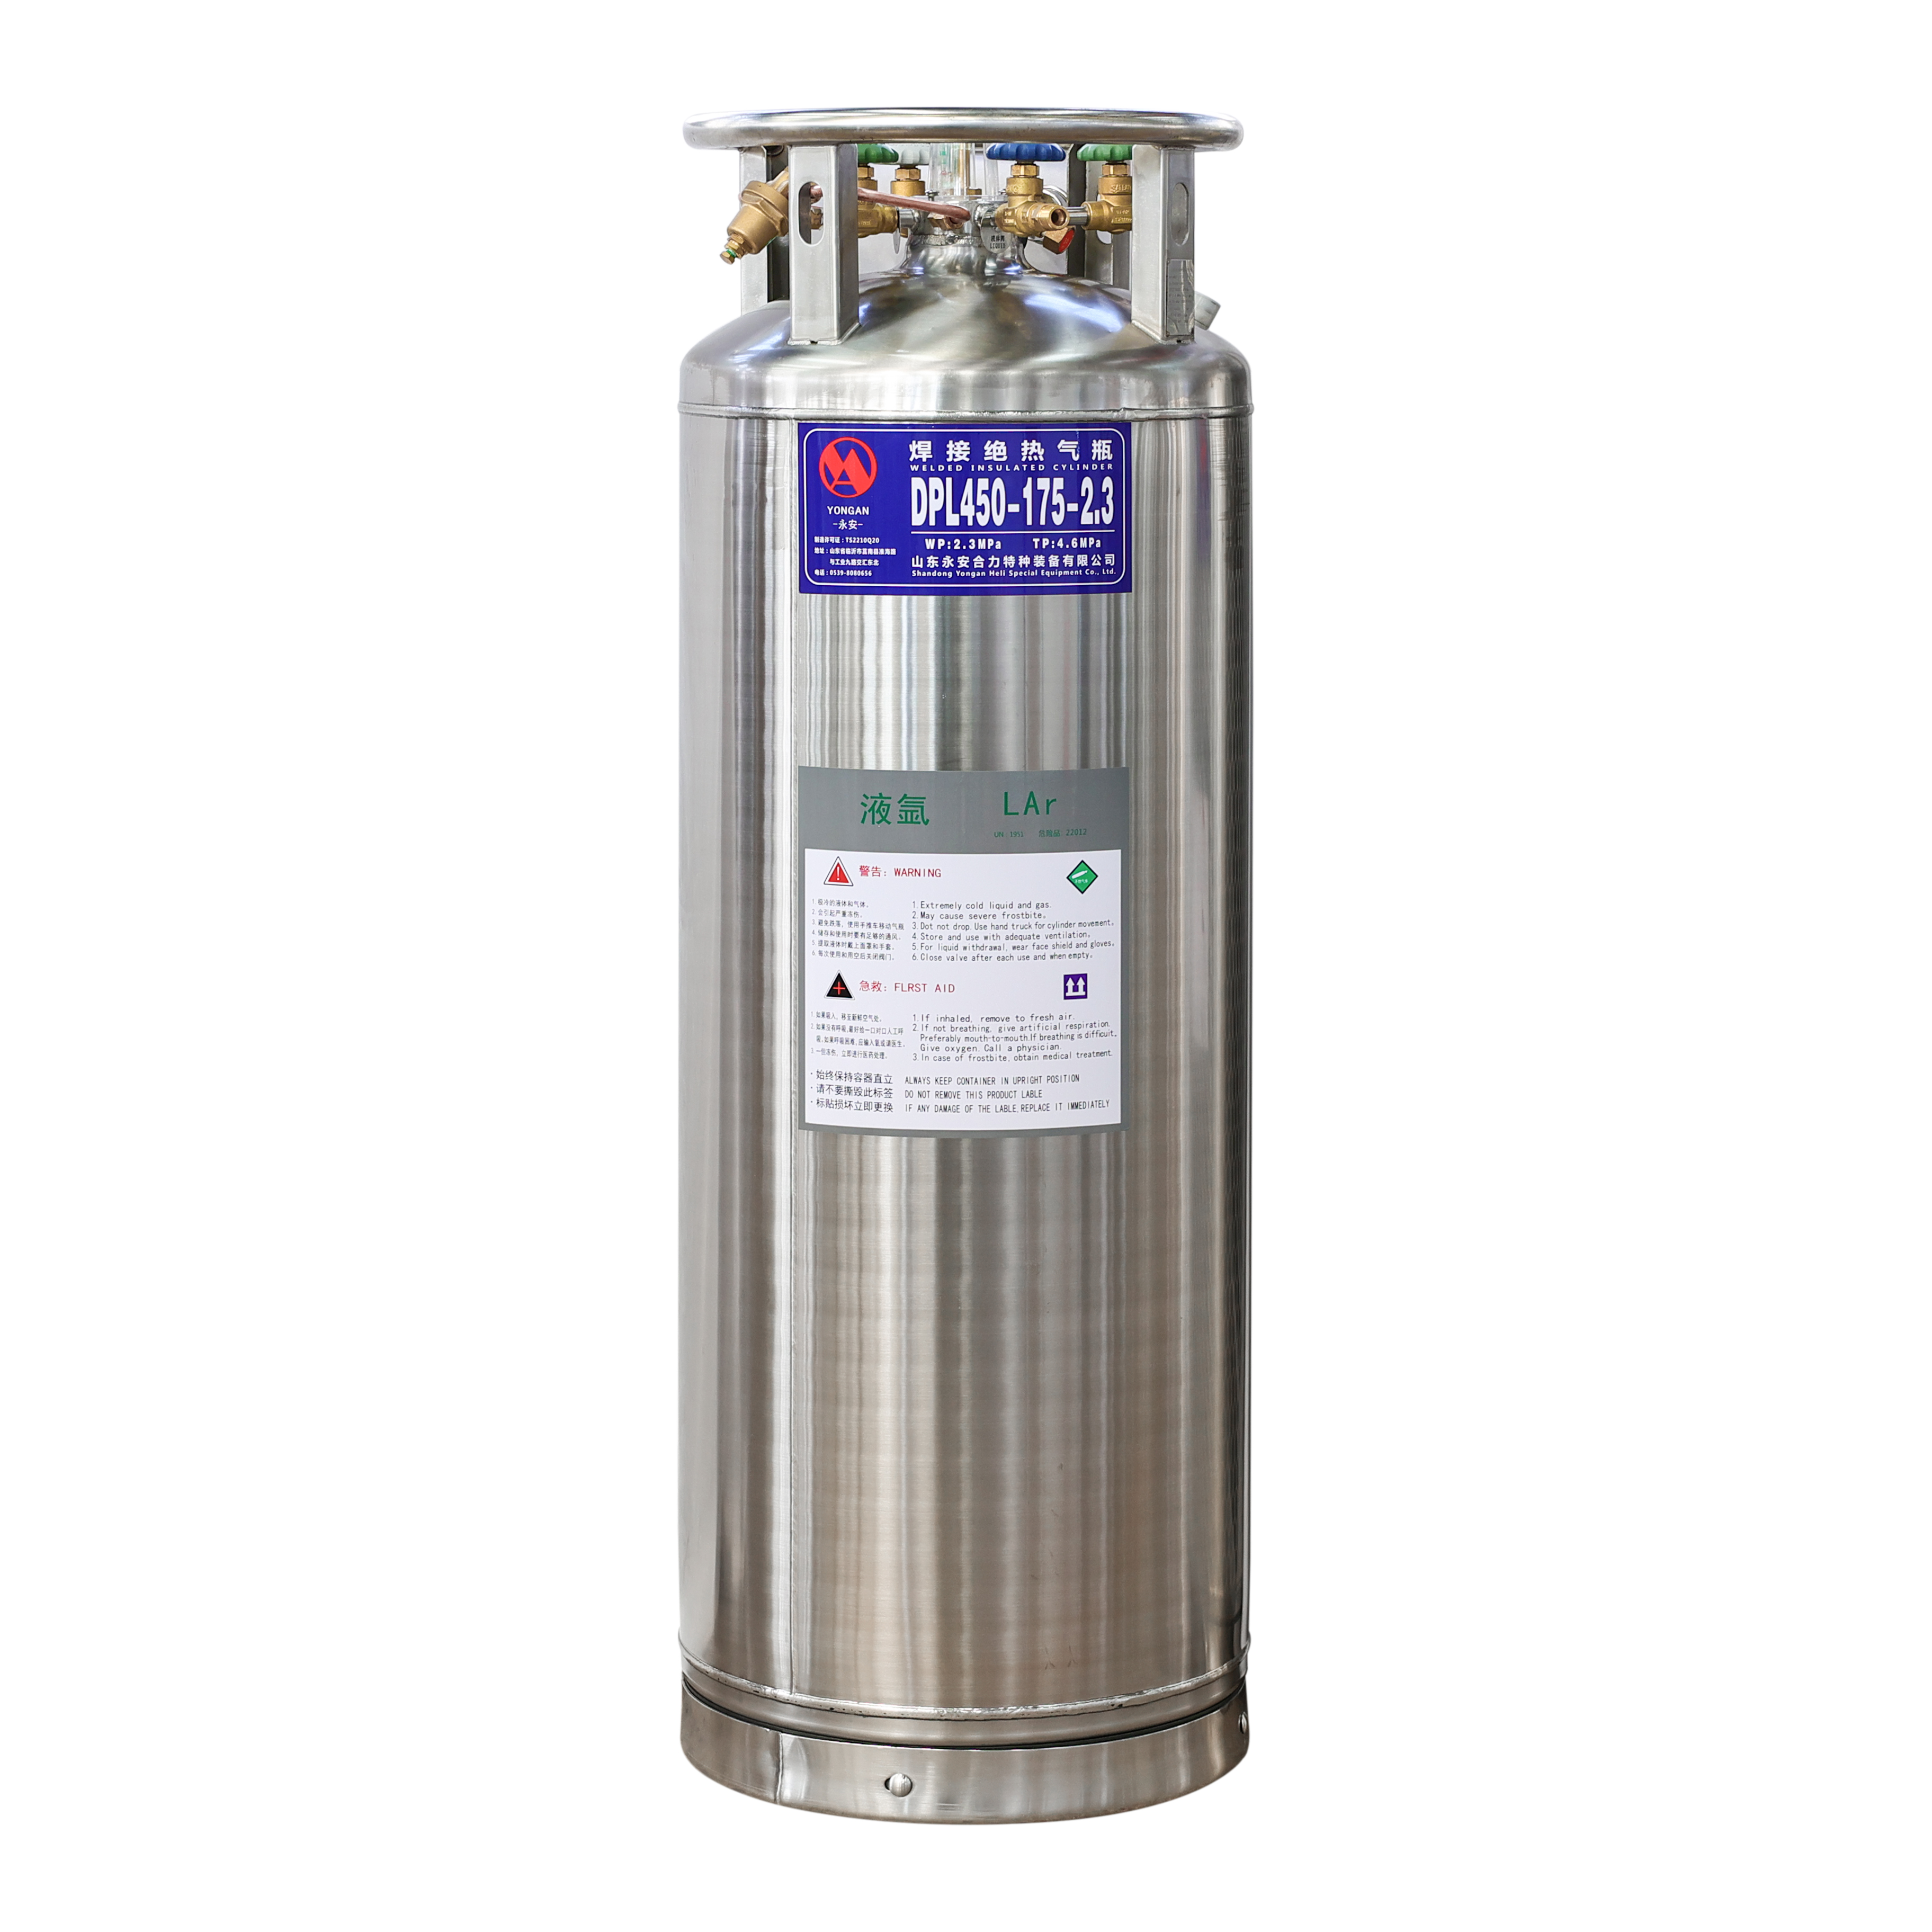 DPL450 195L 23Bar Liquid Oxygen Nitrigen Argon CO2 Industrial and Medical Use Dewar Tank